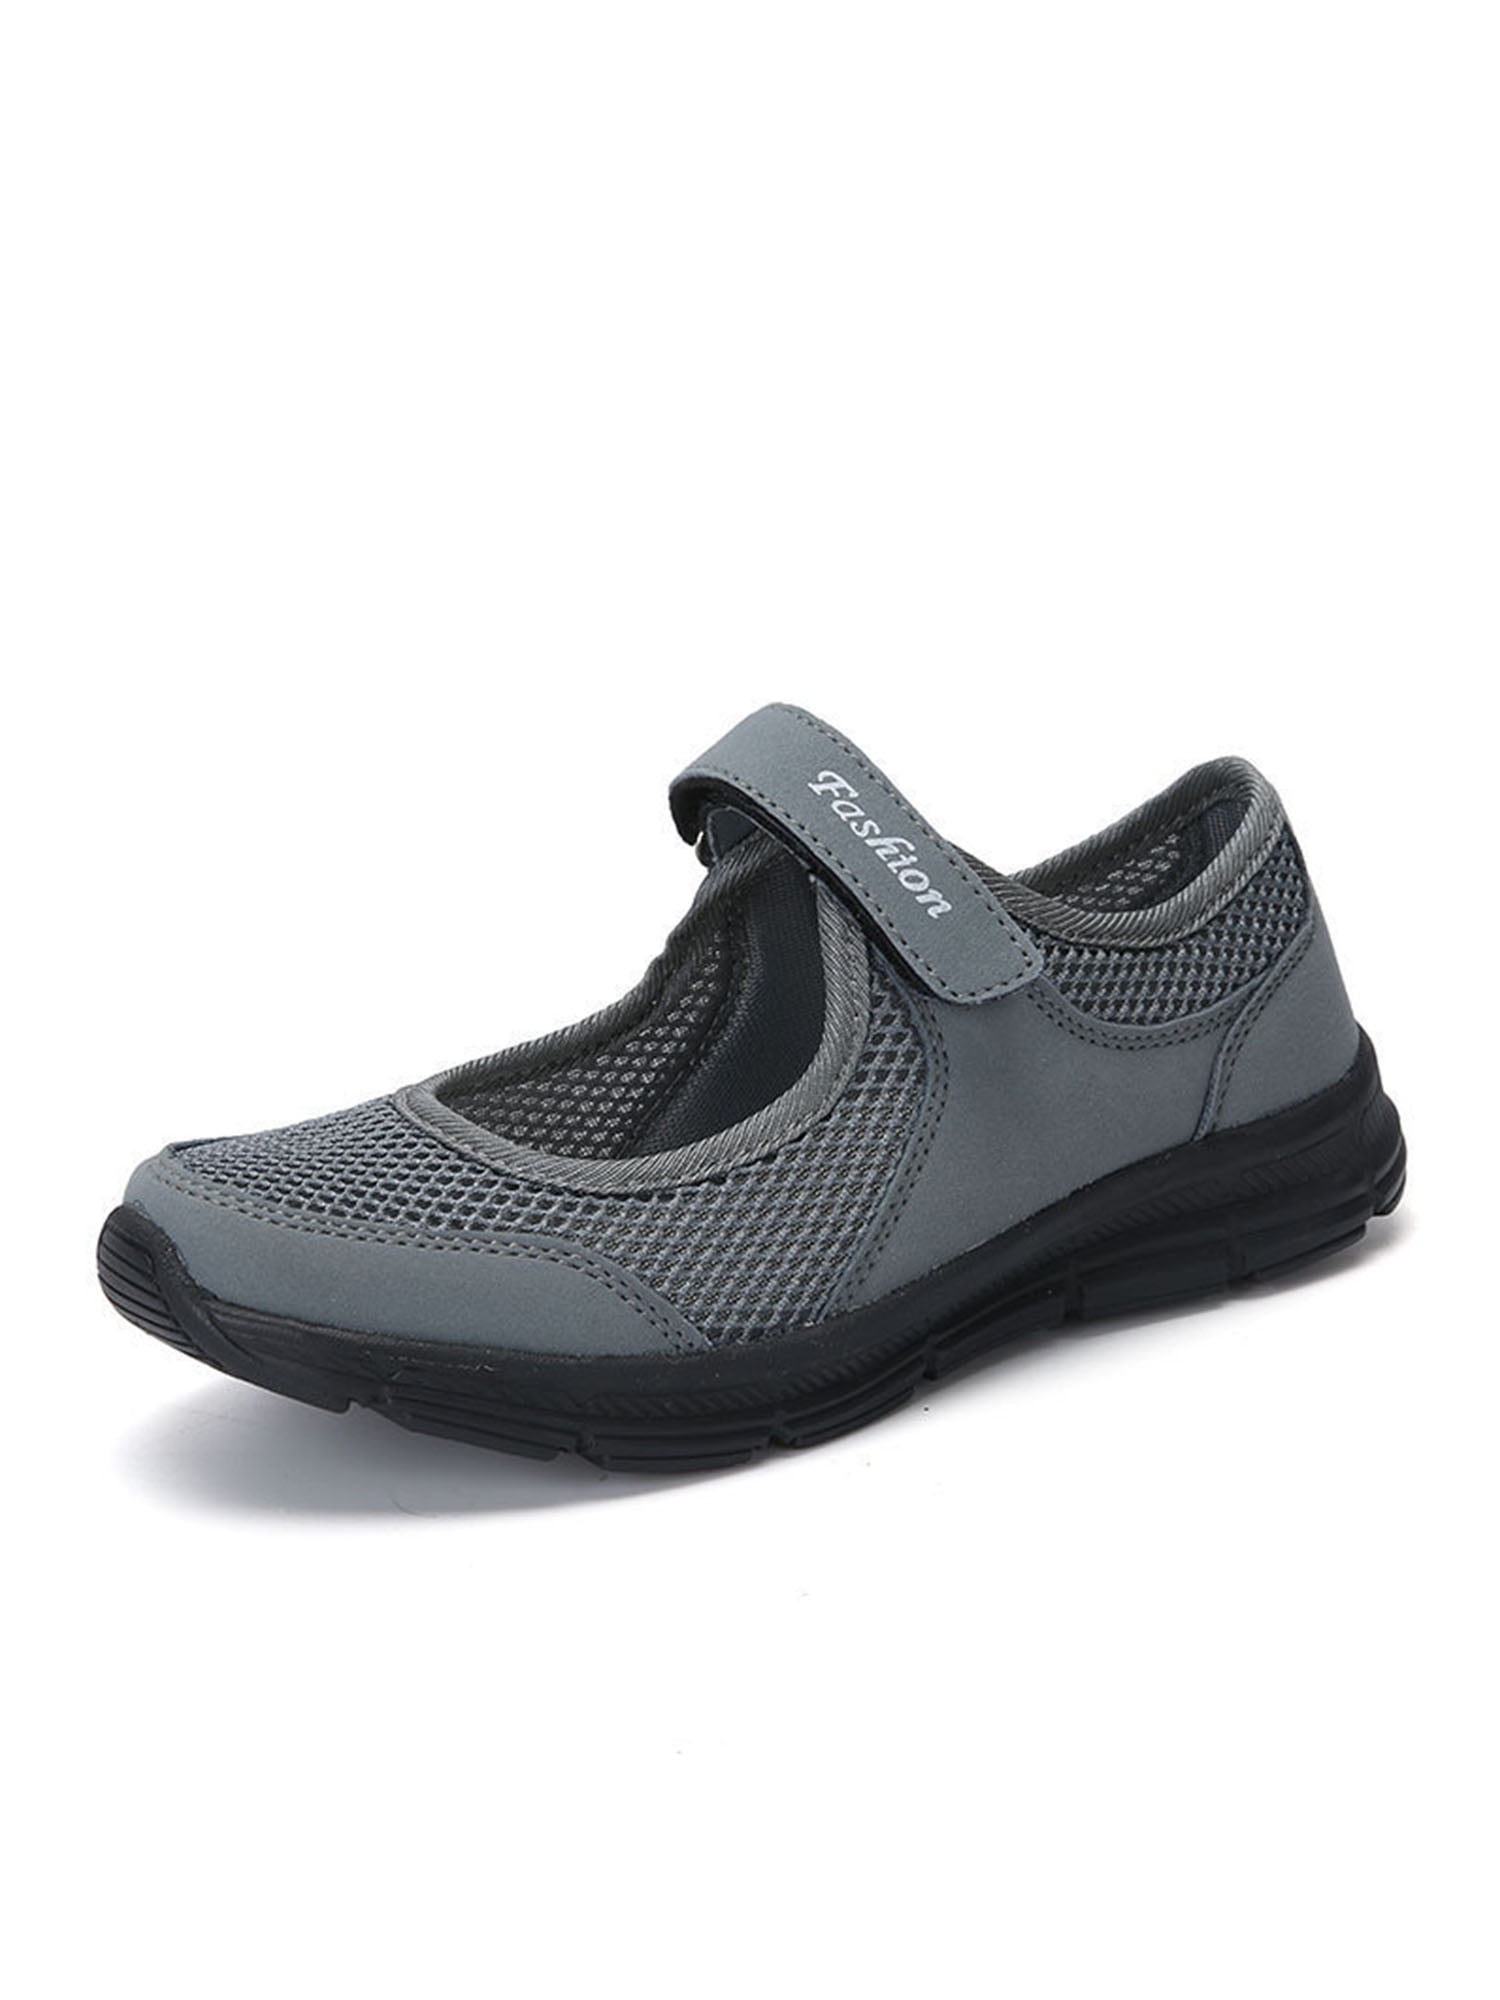 Buy Leader Show Women's Elderly Casual Comfort Walking Shoe Safety Flats  Non-Slip Hook & Loop Sneakers, Grey, 8 at Amazon.in